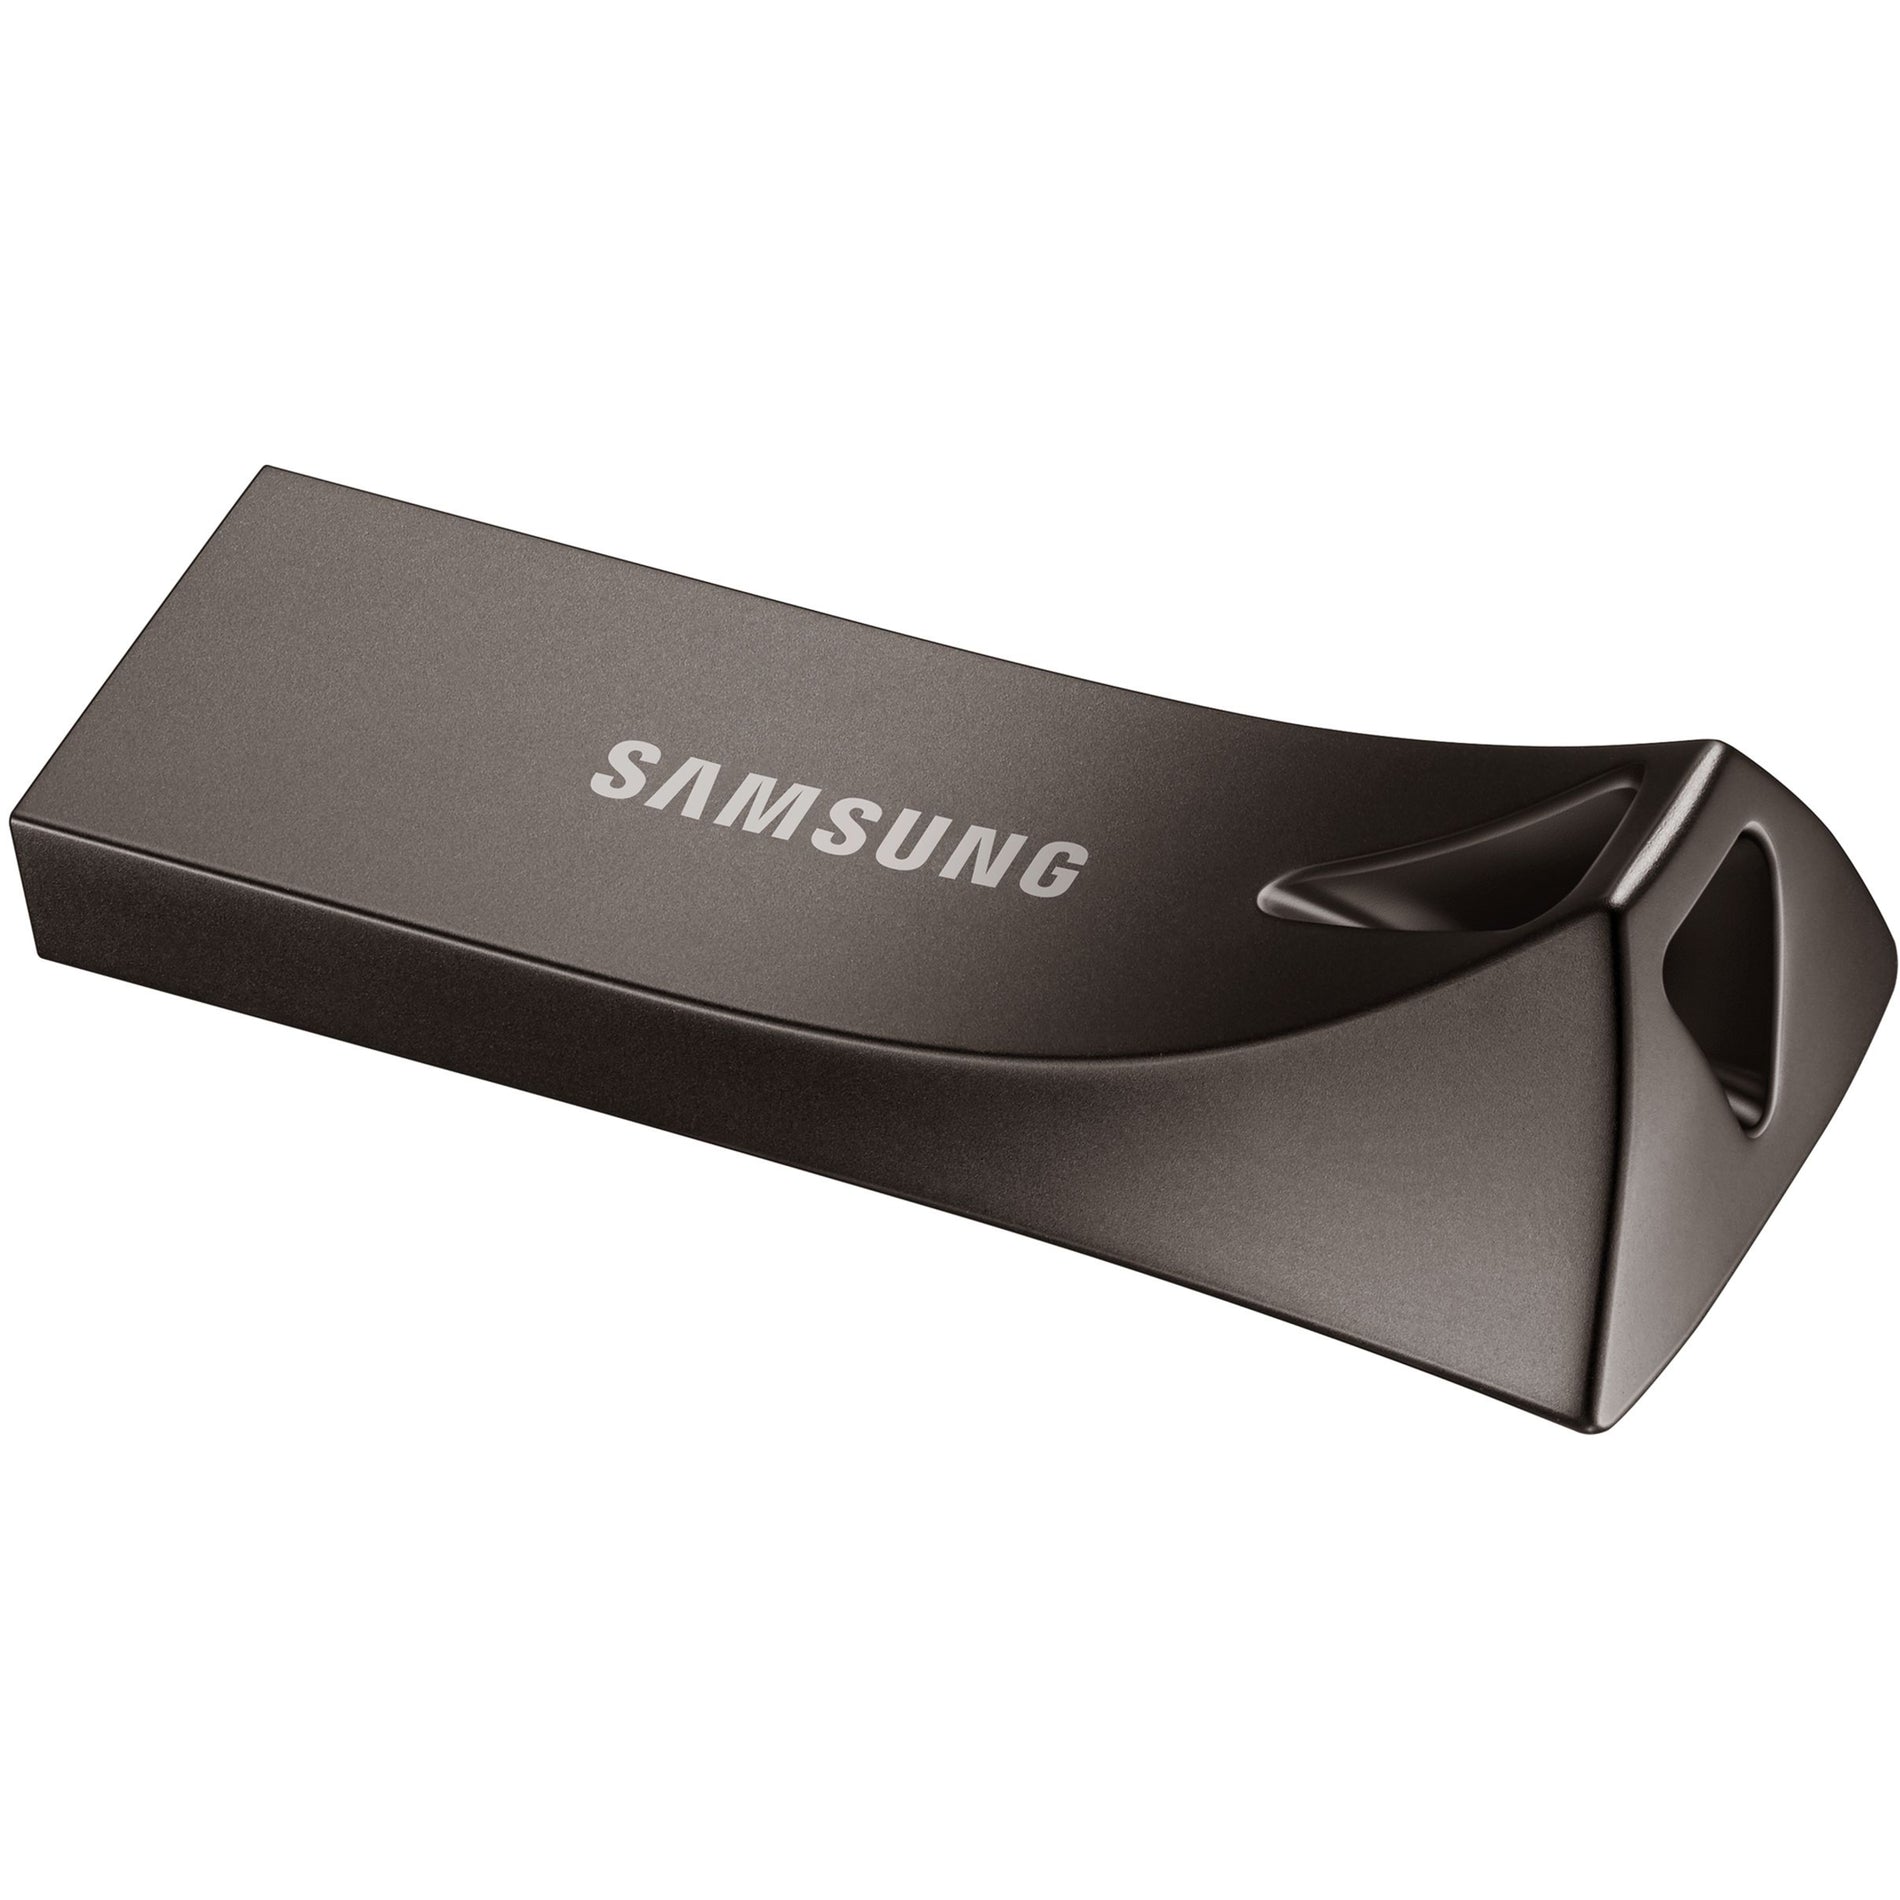 Samsung MUF-256BE4/AM USB 3.1 Flash Drive BAR Plus 256GB Titan Gray, 5 Year Warranty